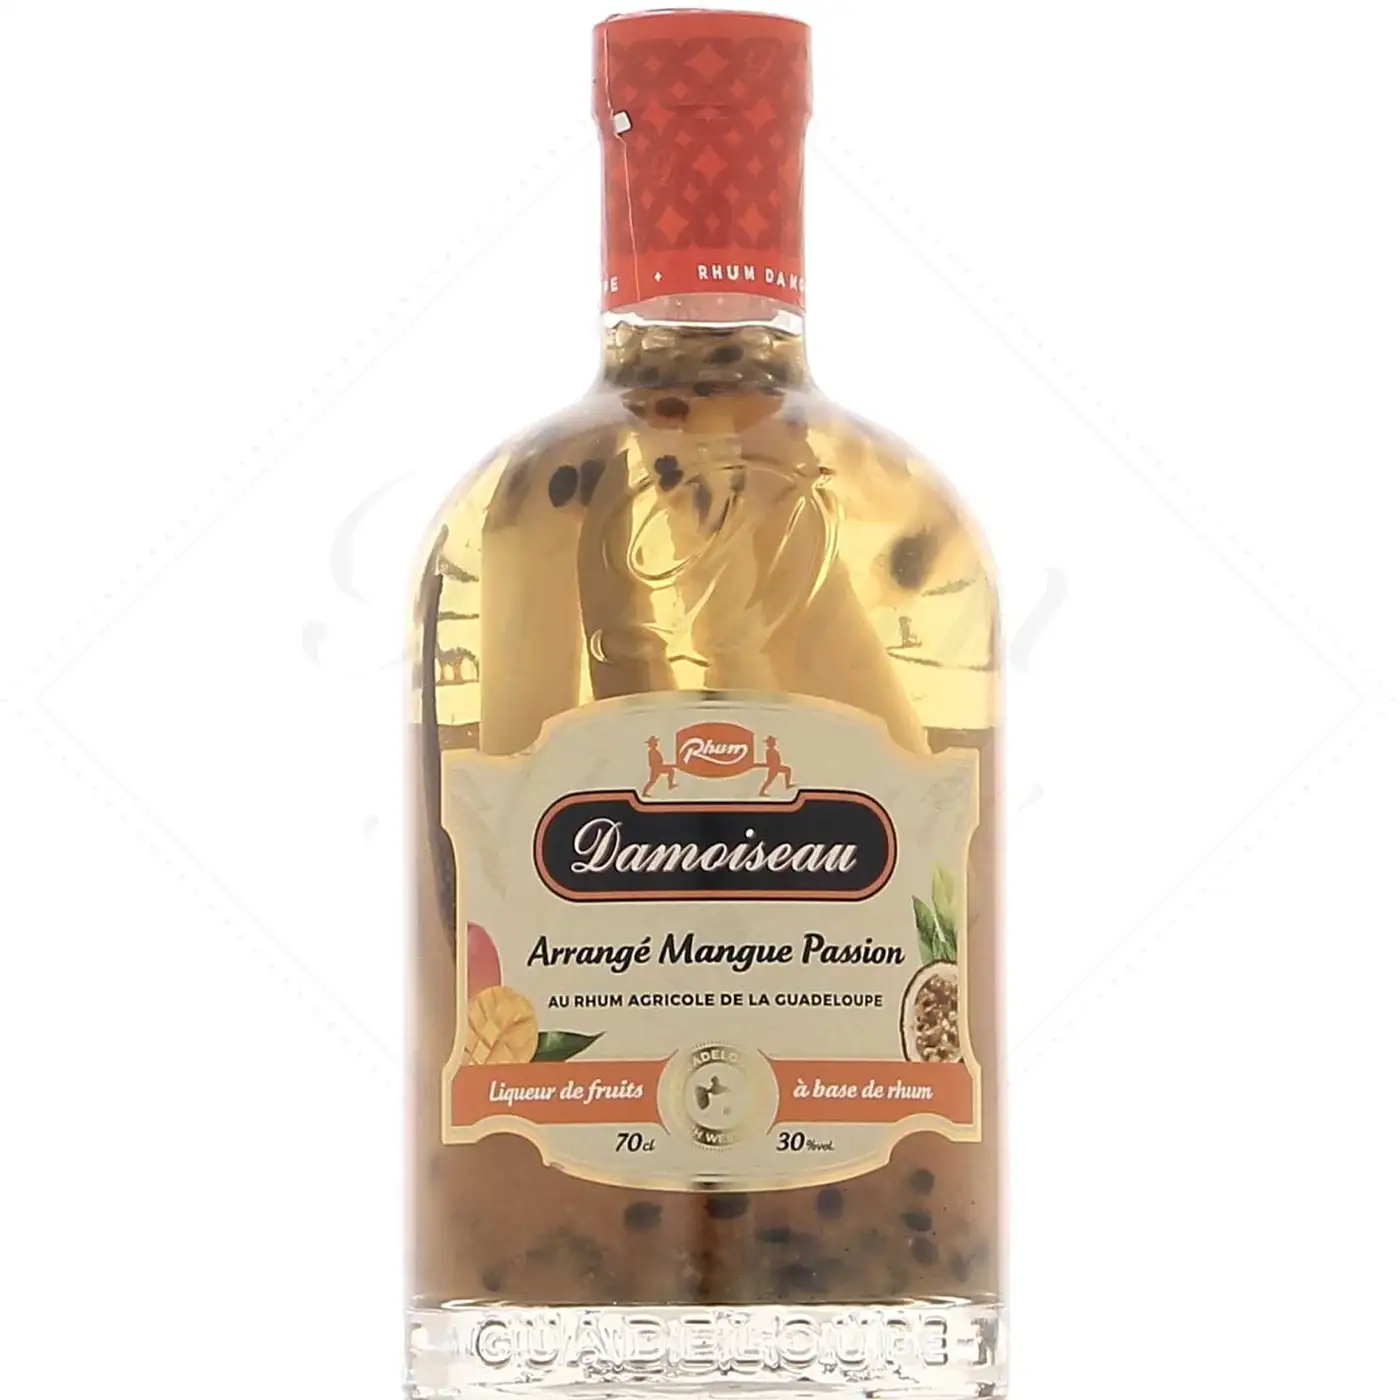 Image of the front of the bottle of the rum Les Arrangés Mangue Passion